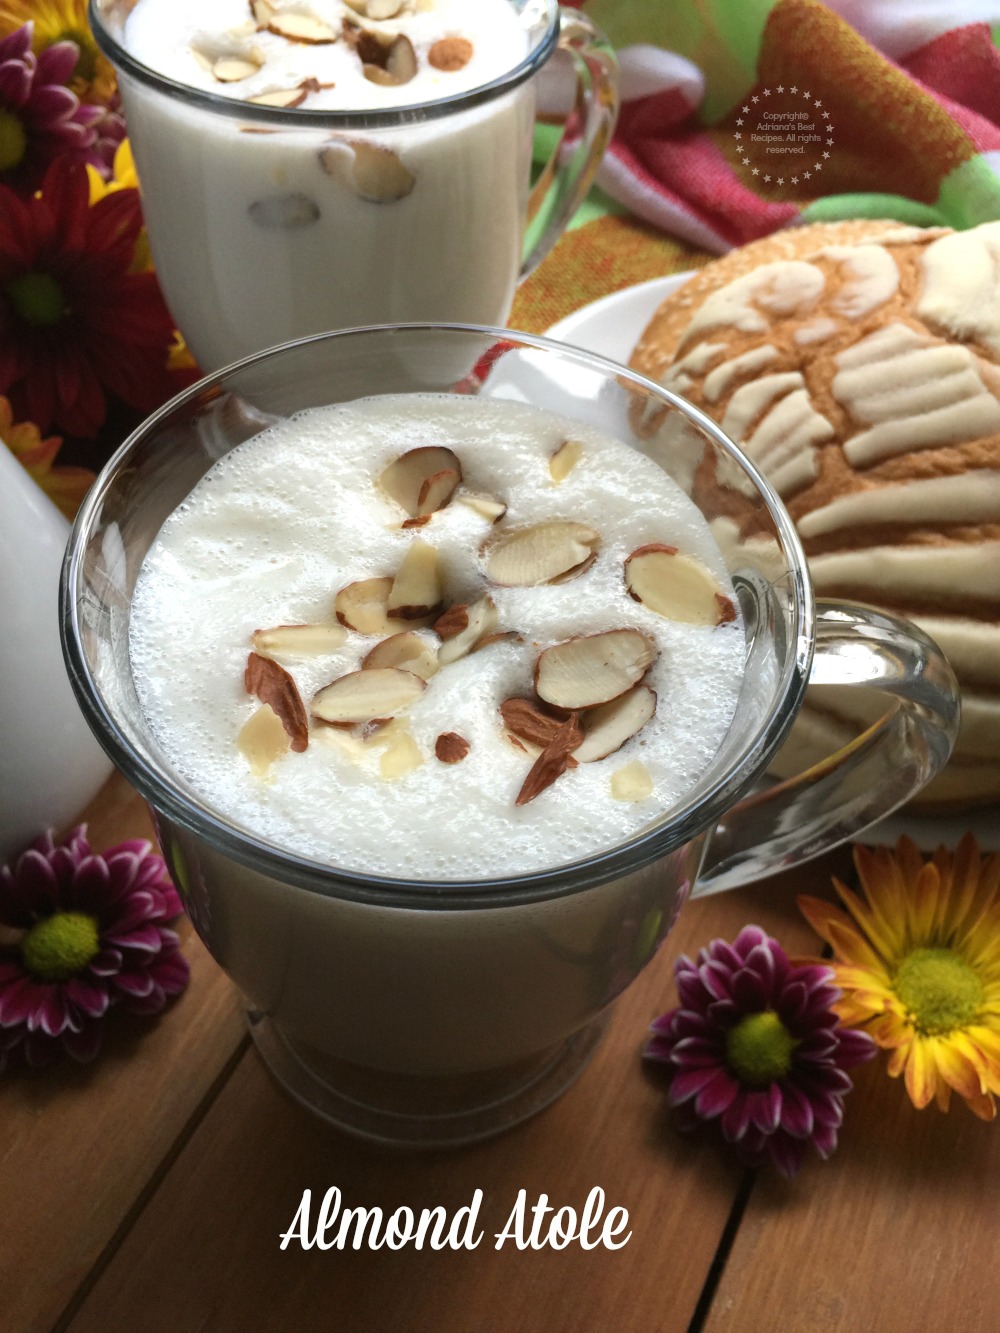 Almond atole recipe to celebrate Hispanic Heritage Month with milk